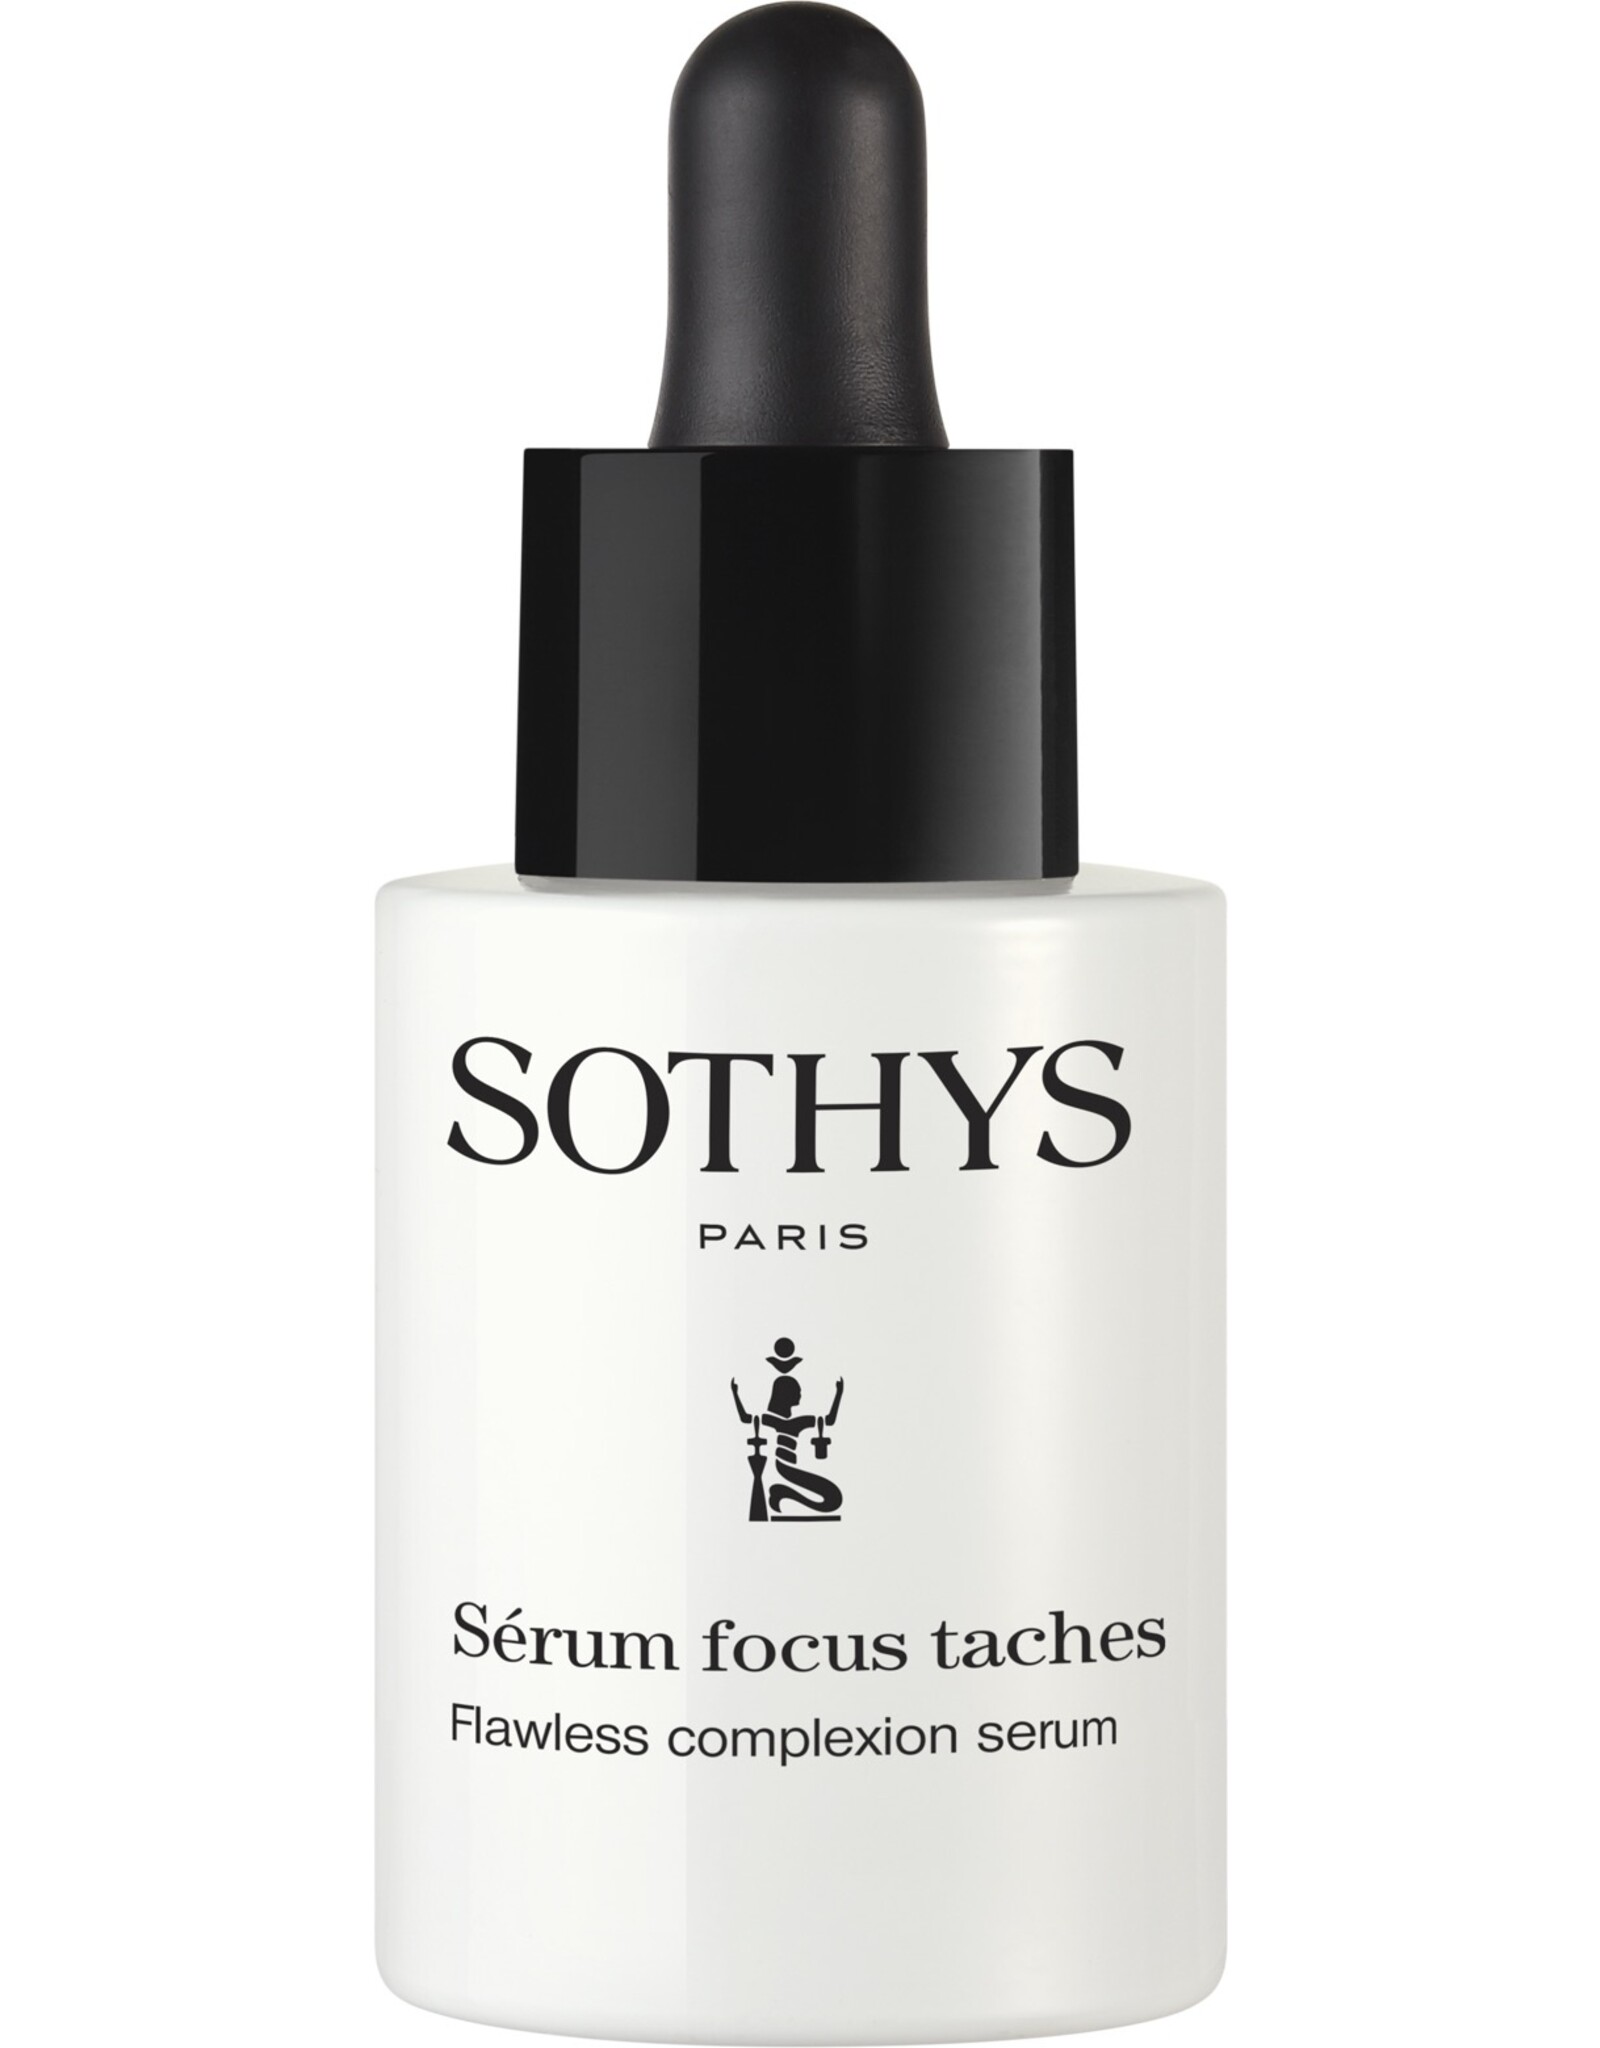 SOTHYS Flawless complexion serum - Sothys